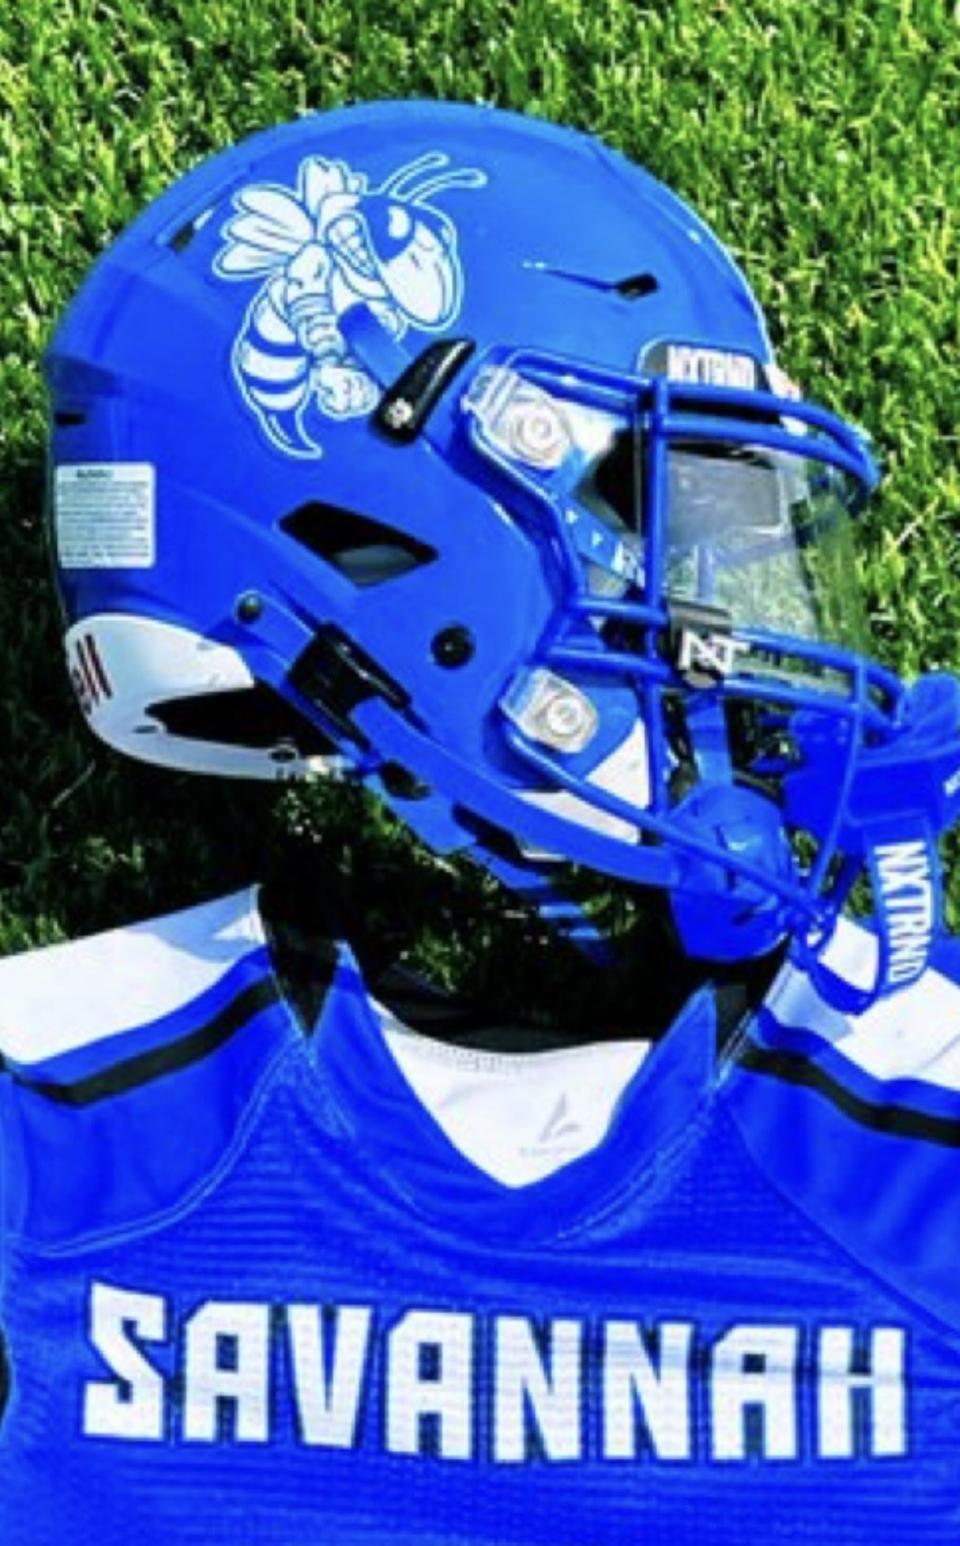 Savannah High's football helmet